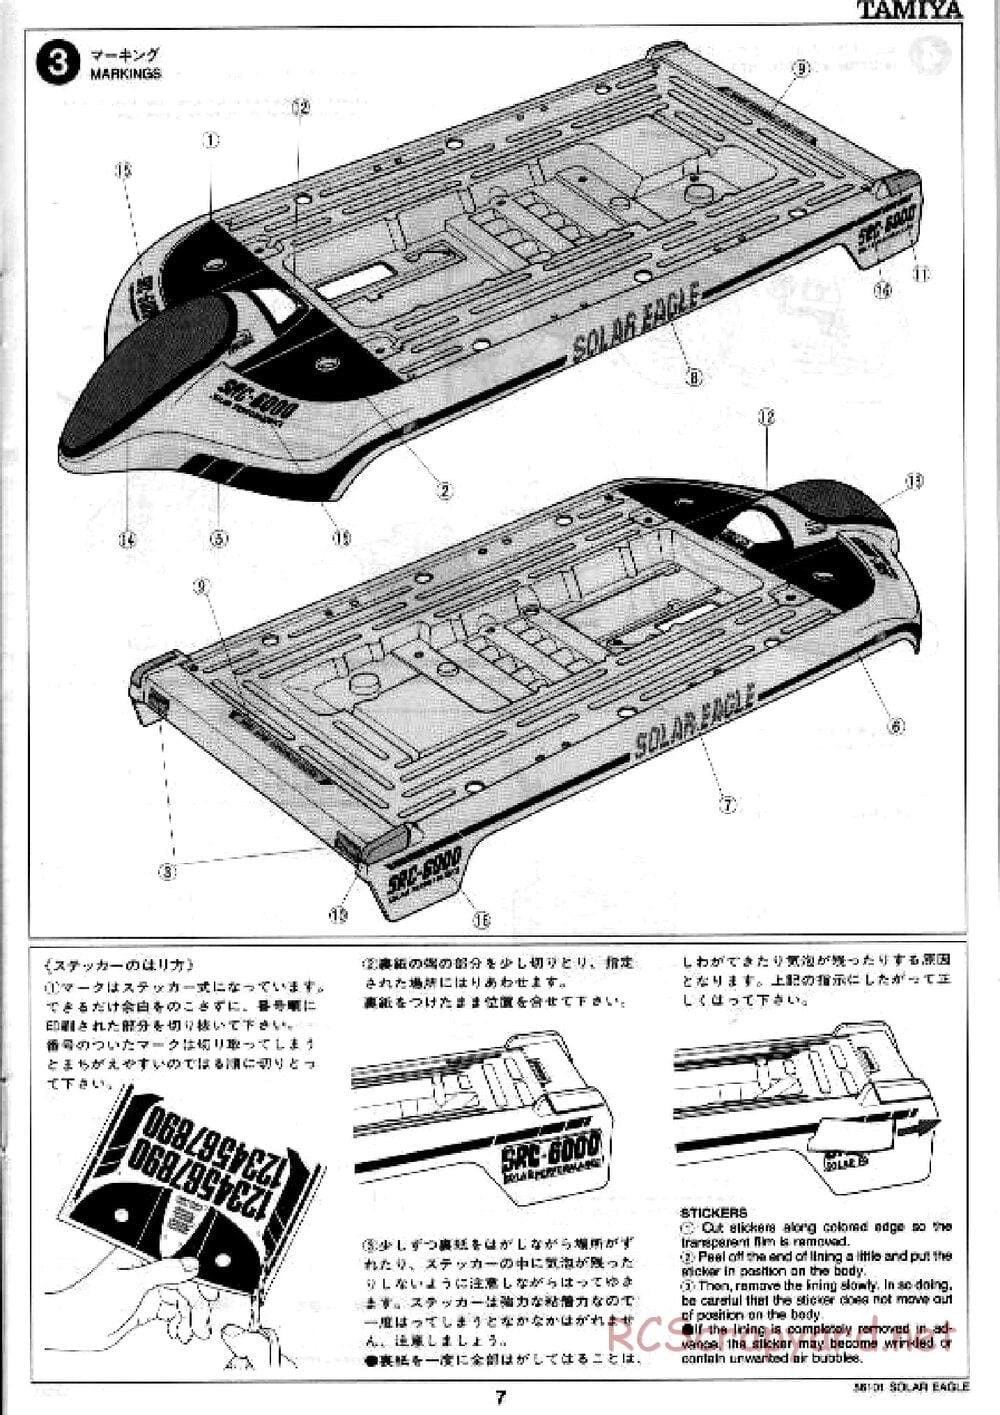 Tamiya - Solar Eagle SRC-6000 Chassis - Manual - Page 7